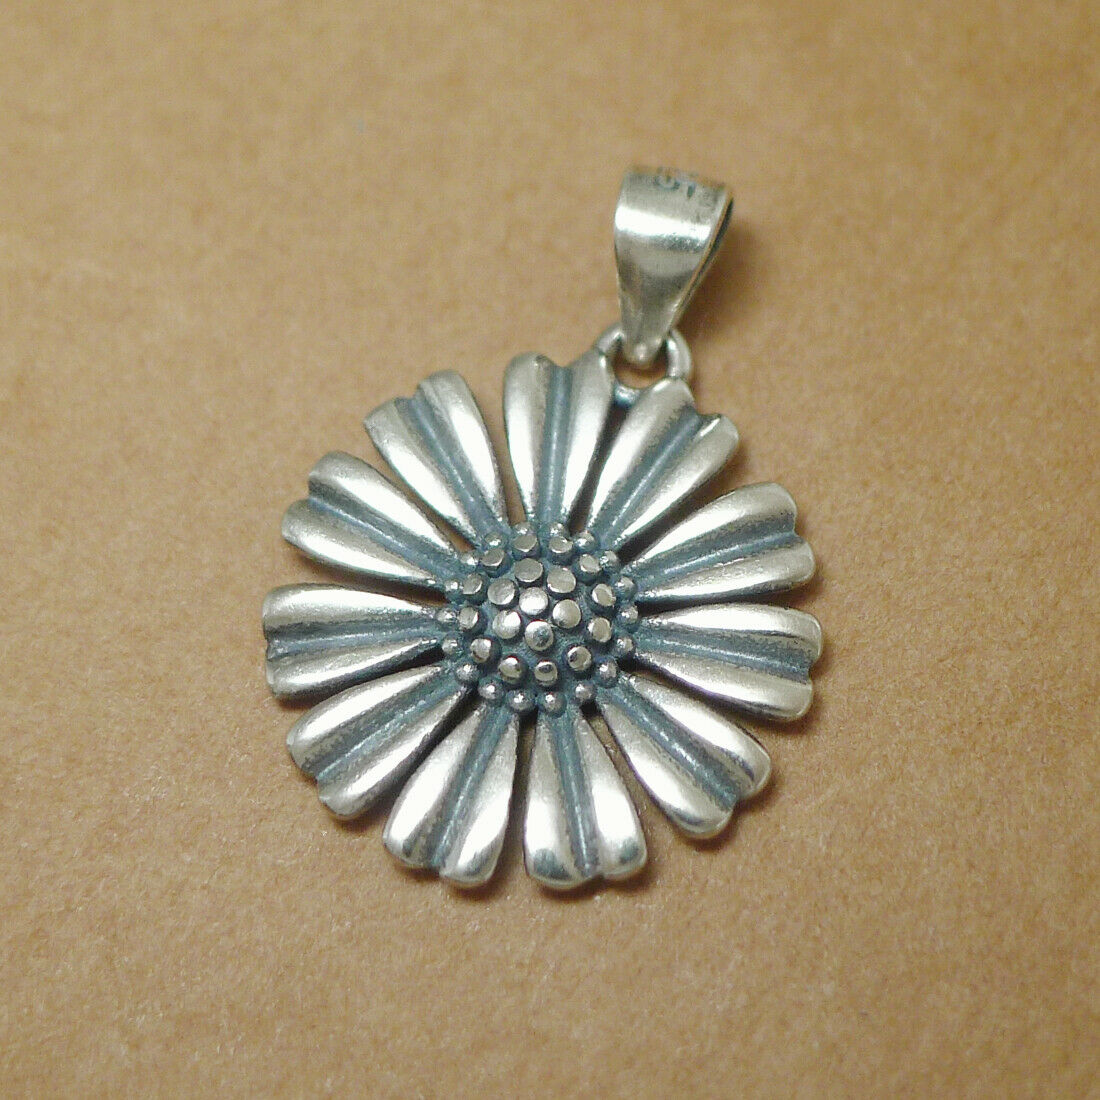 Sterling Silver 17mm Solid Oxidized Retro Daisy Sun Flower Pendant Necklace - sugarkittenlondon